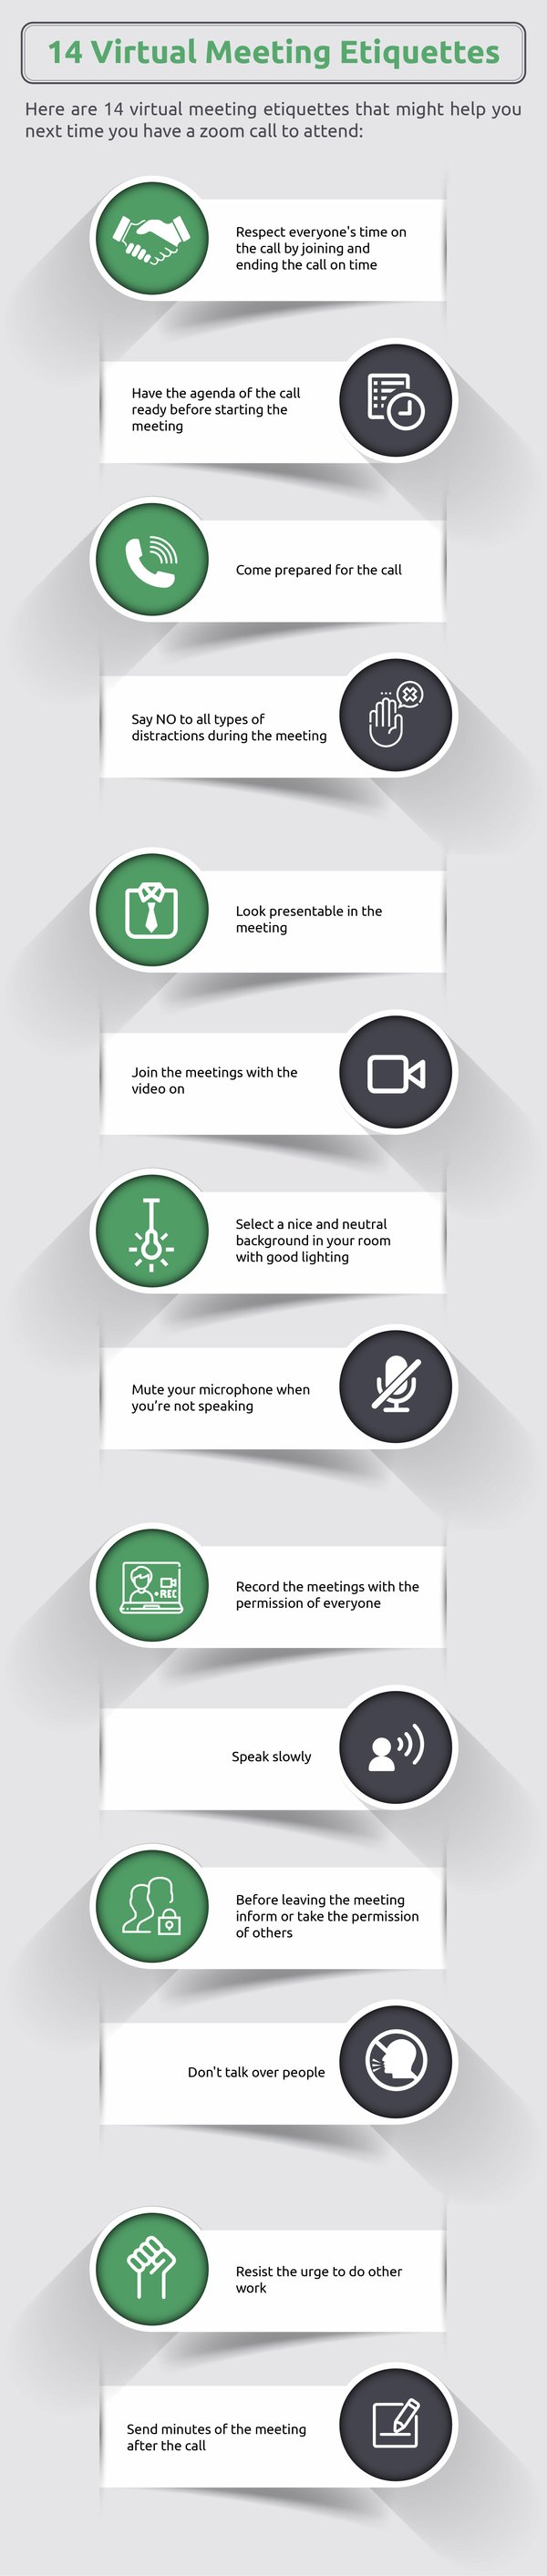 14 Virtual Meeting Etiquettes Infographic